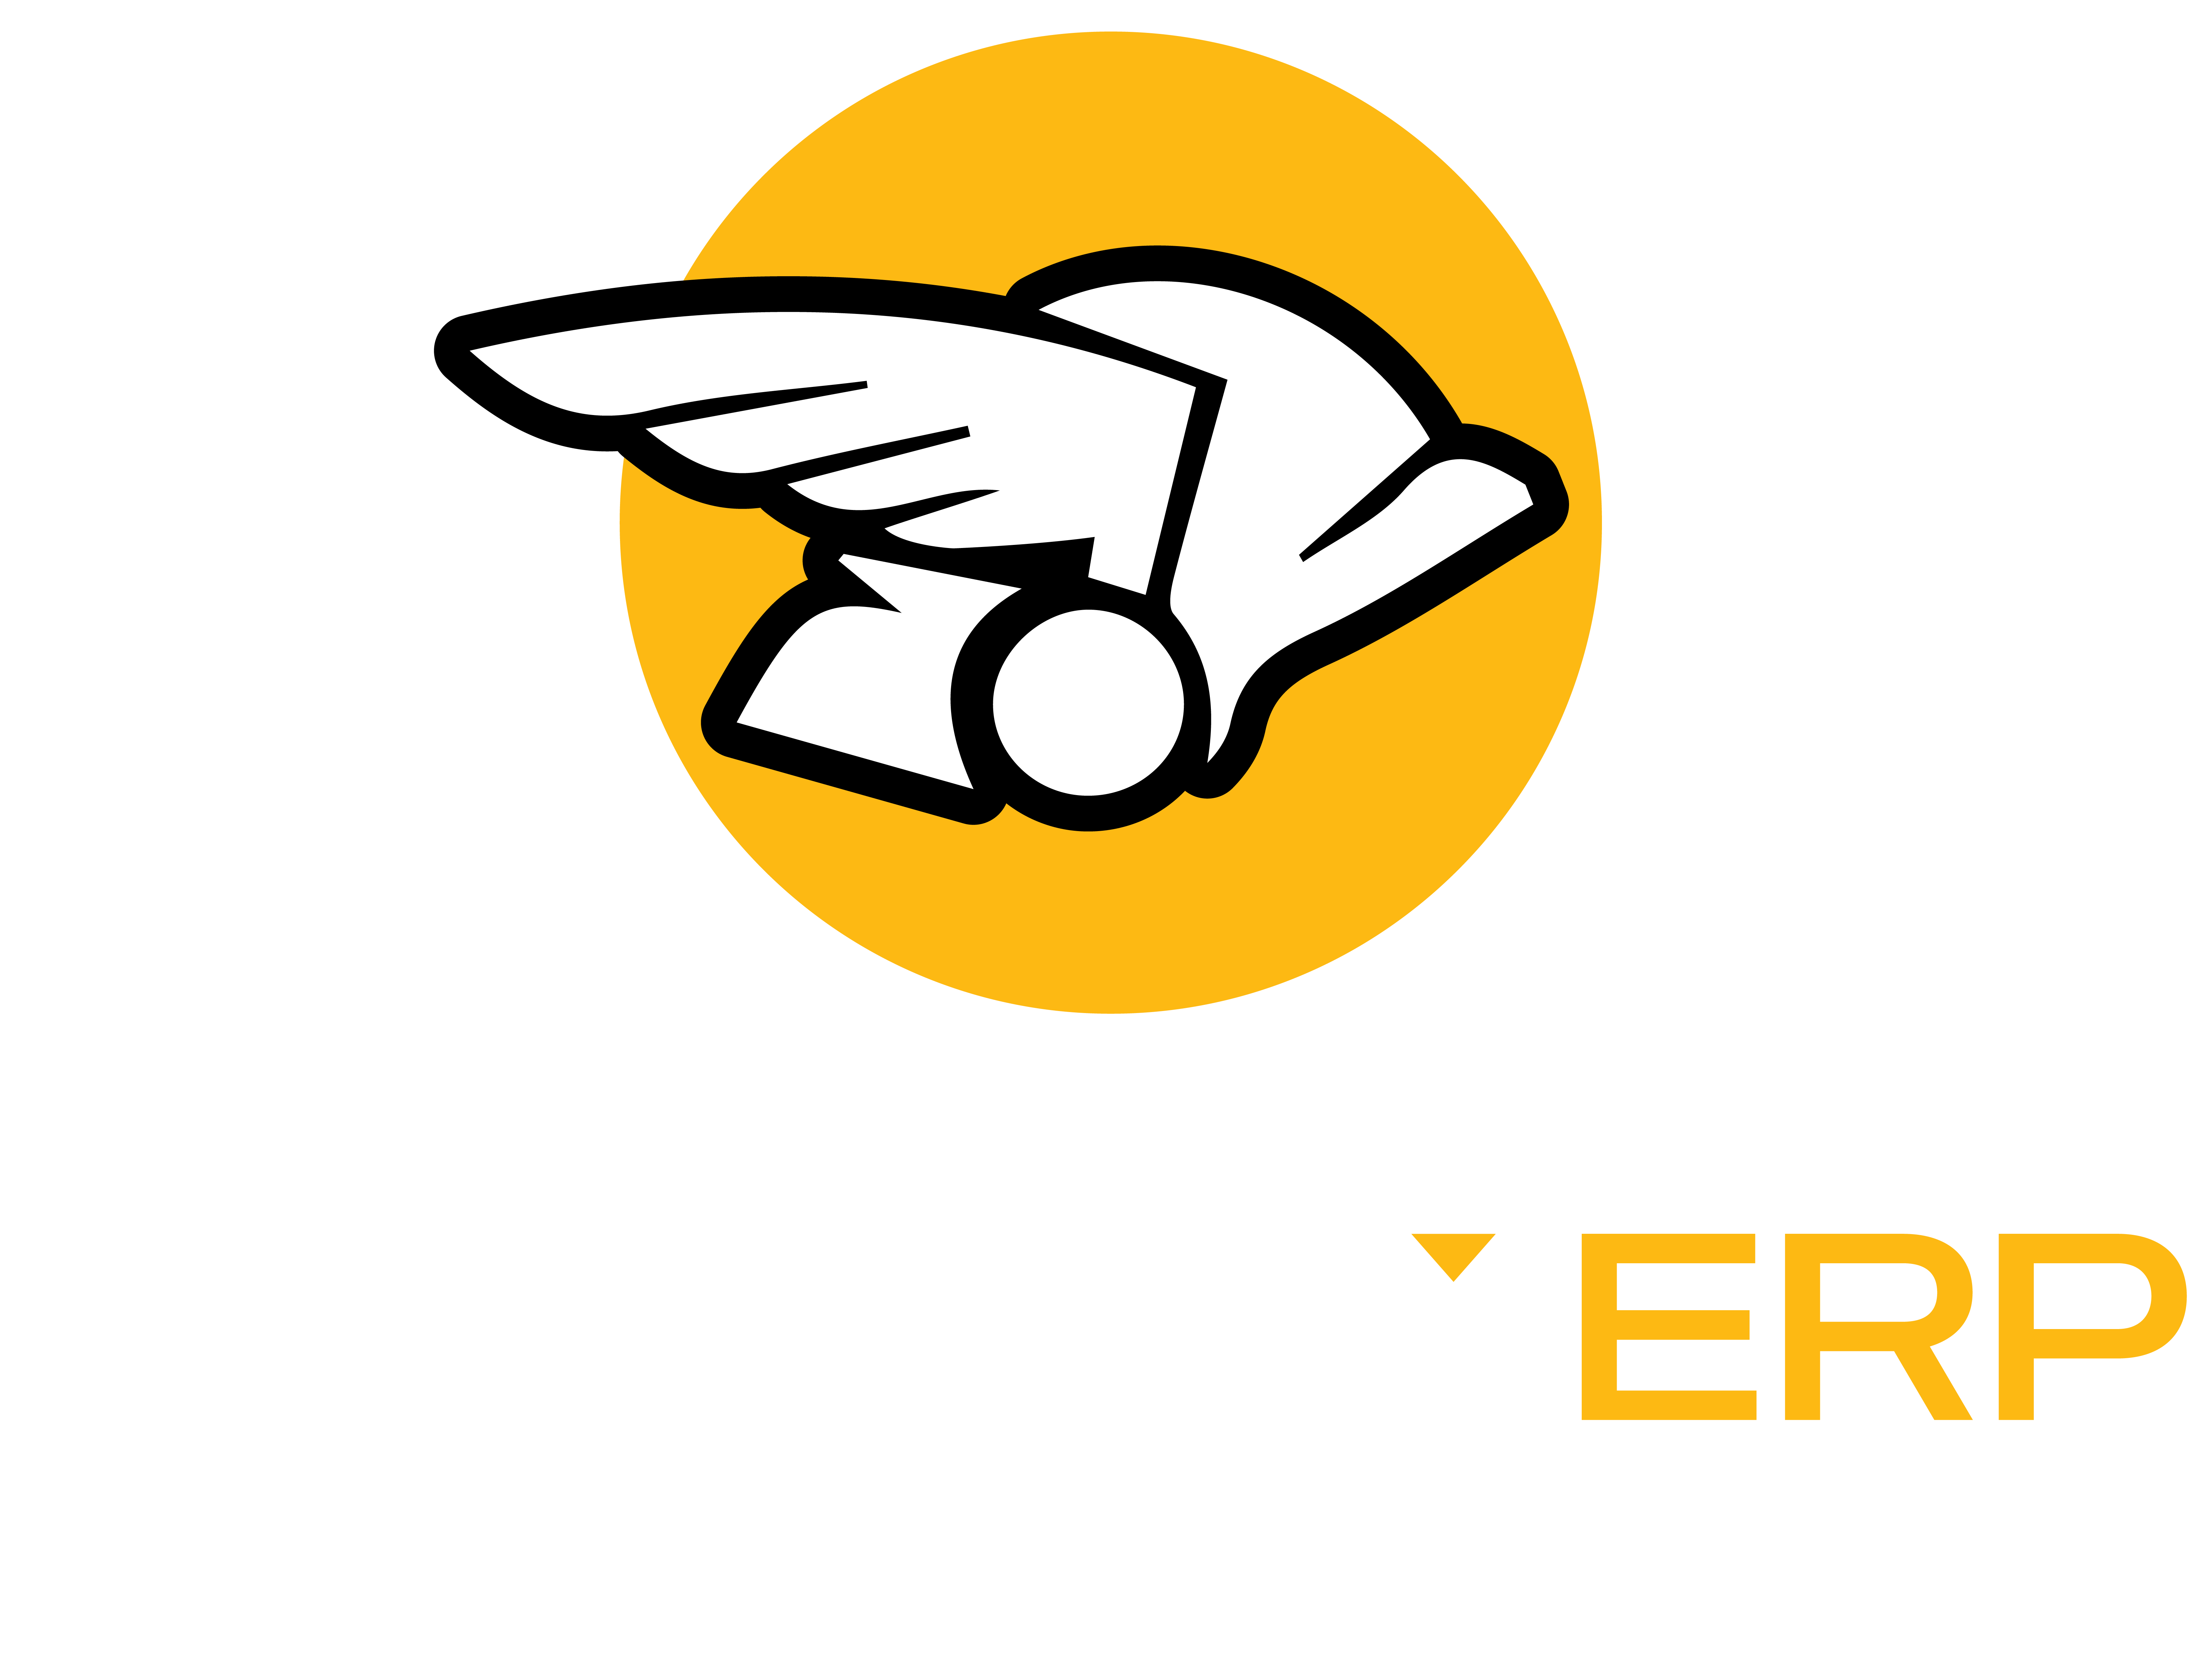 Mercury ERP